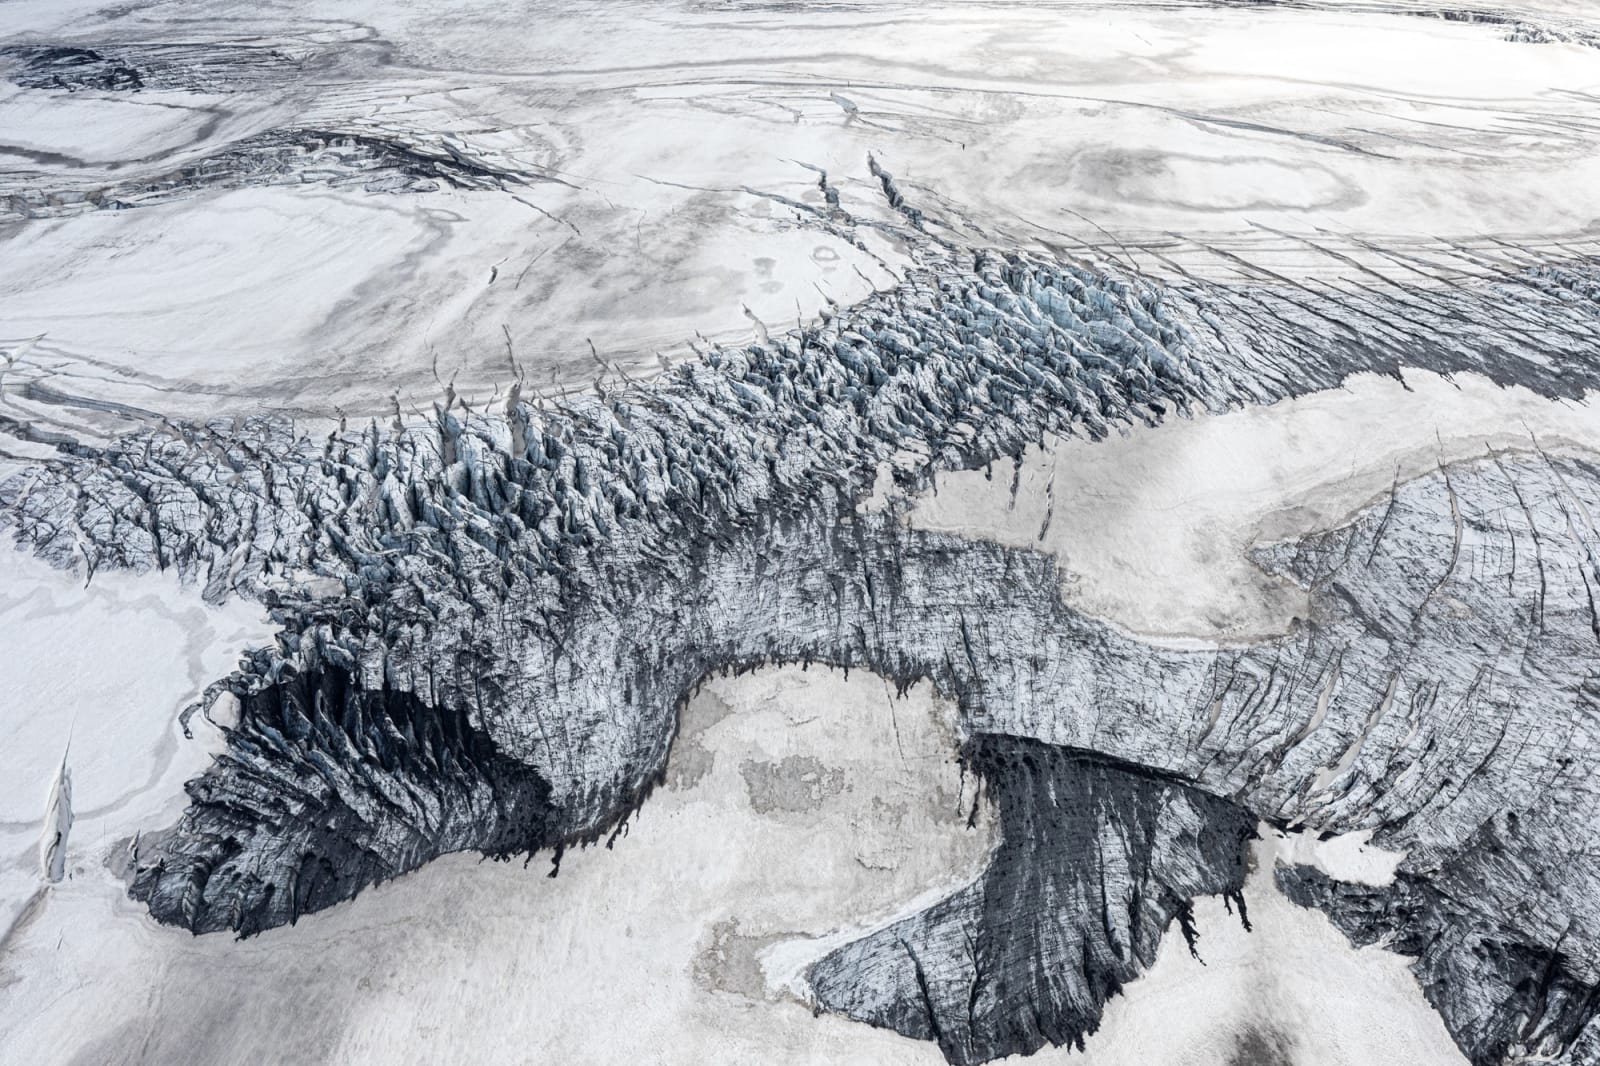 Matjaž Krivic, Islandski ledenik 11 / Iceland Glacier 11, 2019